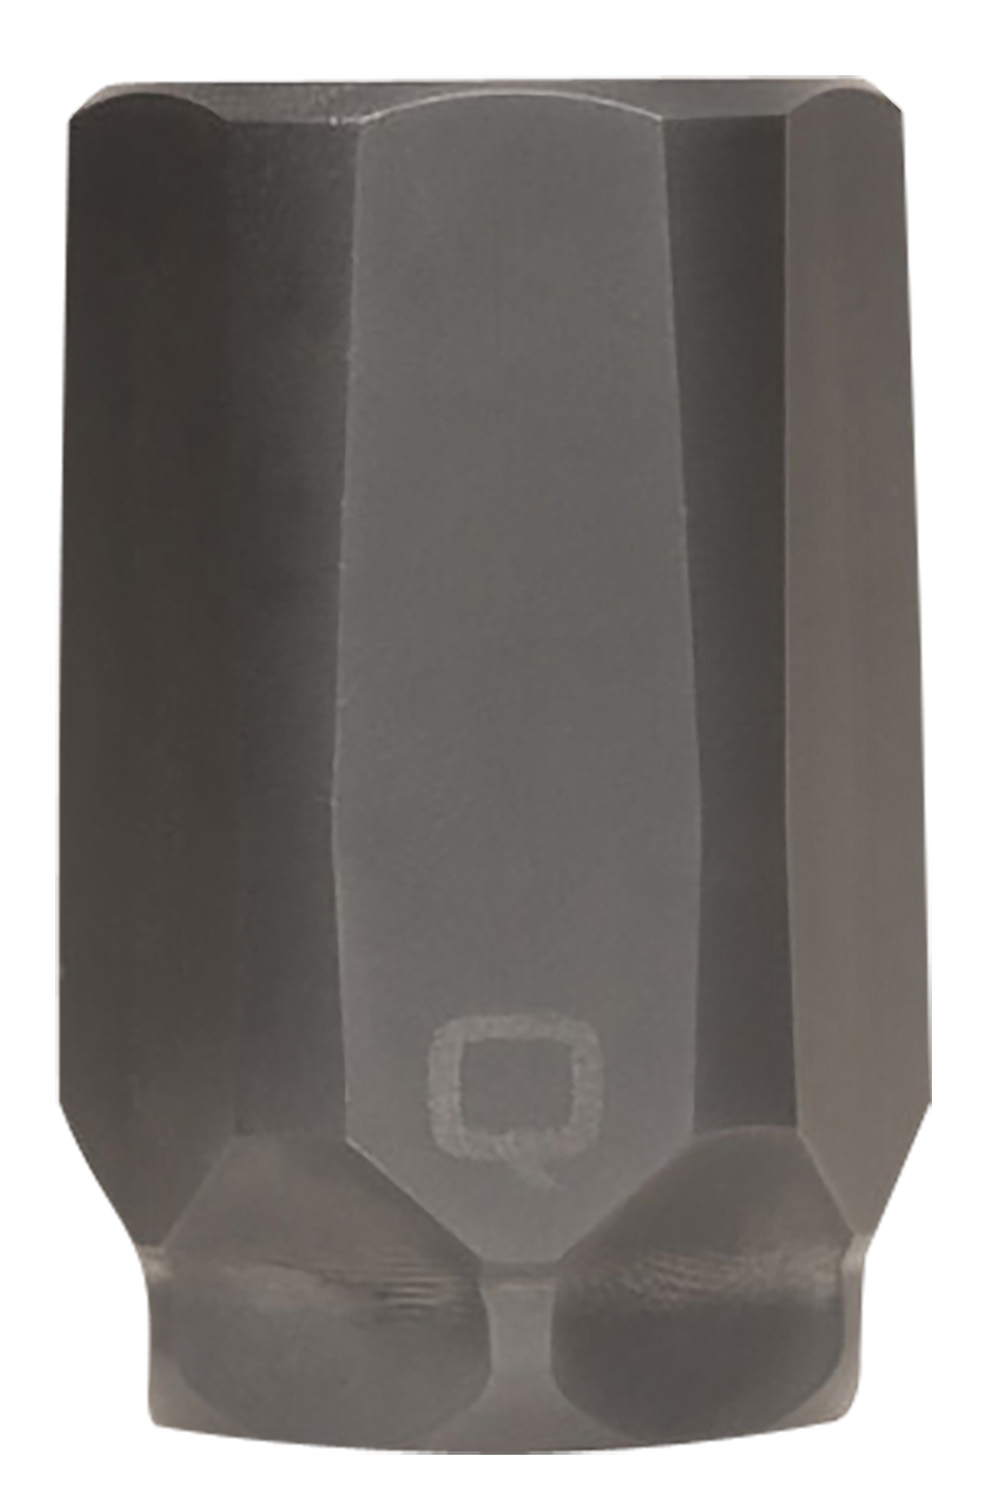 Q LLC WHISTLETIPPVD Whistle Tip Blast Mitigation Device QD, Black PVD, 1.85" L, 1.16" D, For Cherry Bomb Brake